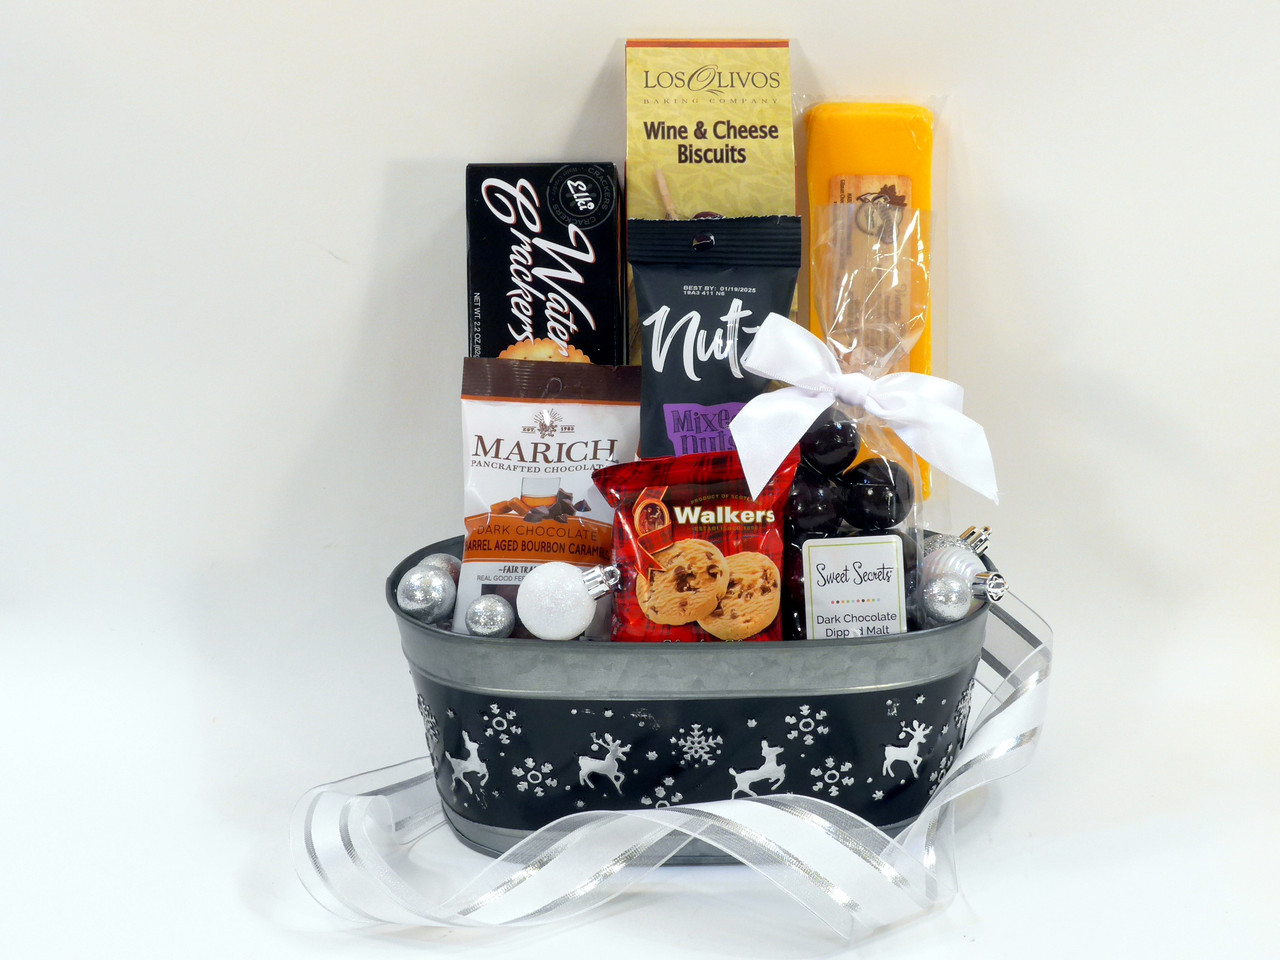 Christmas Box Mom Gift Box Xmas Gift Box Spa Gift Set Self Care